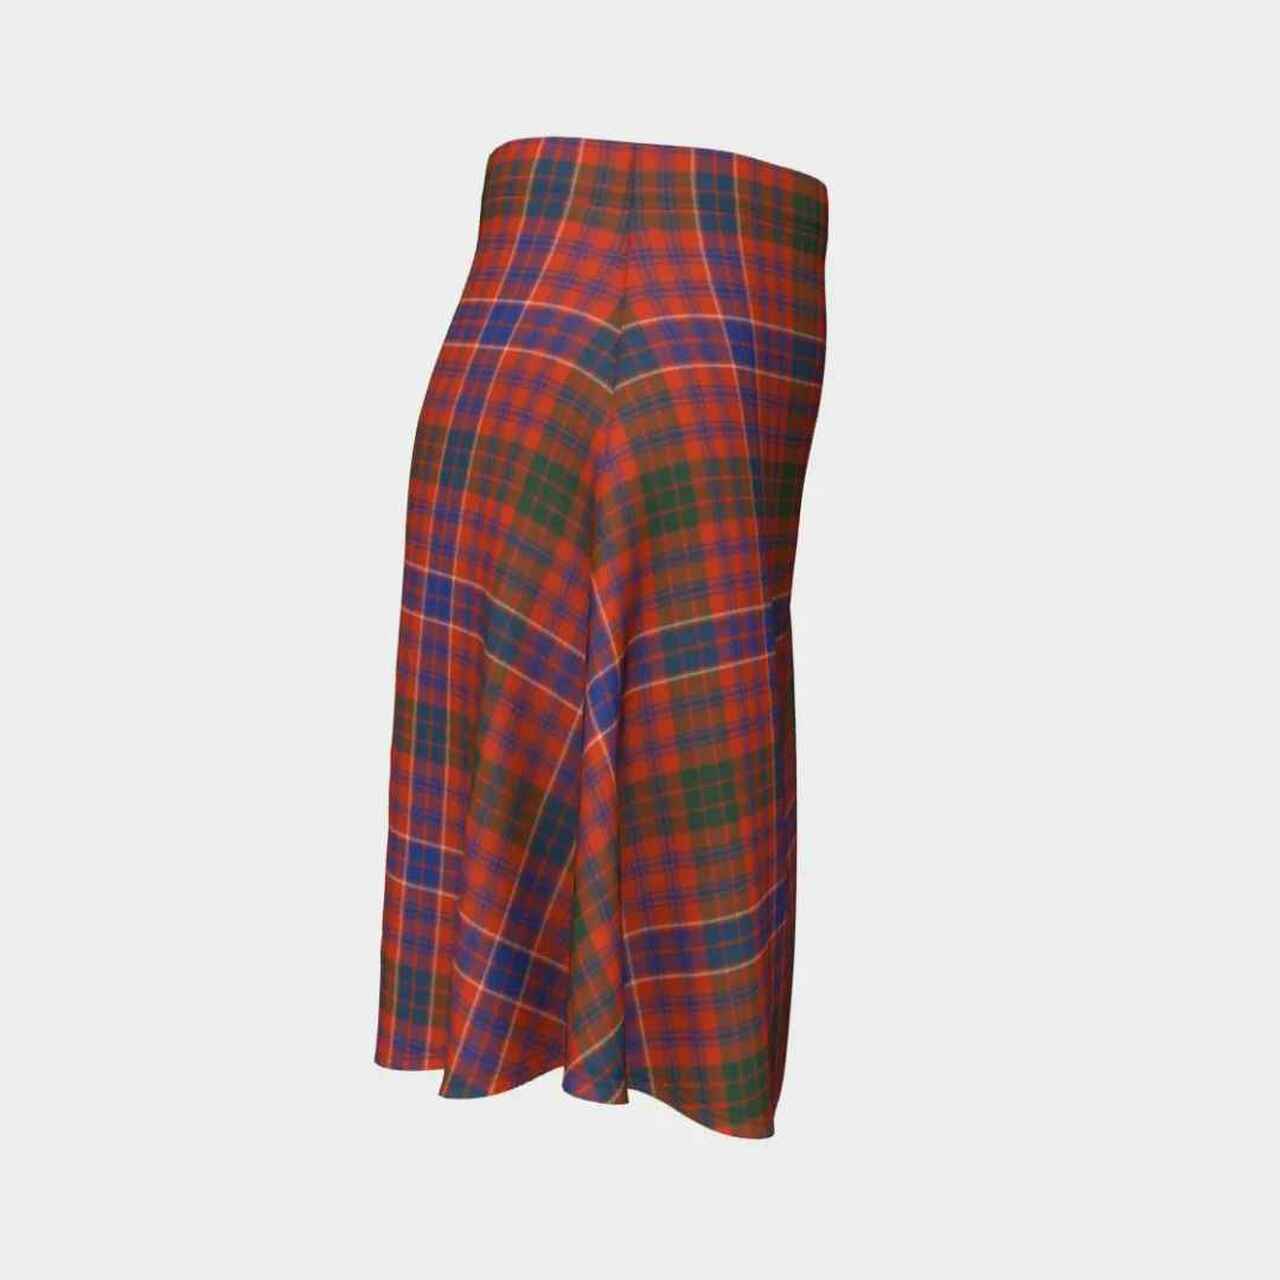 MacRae Ancient Tartan Flared Skirt